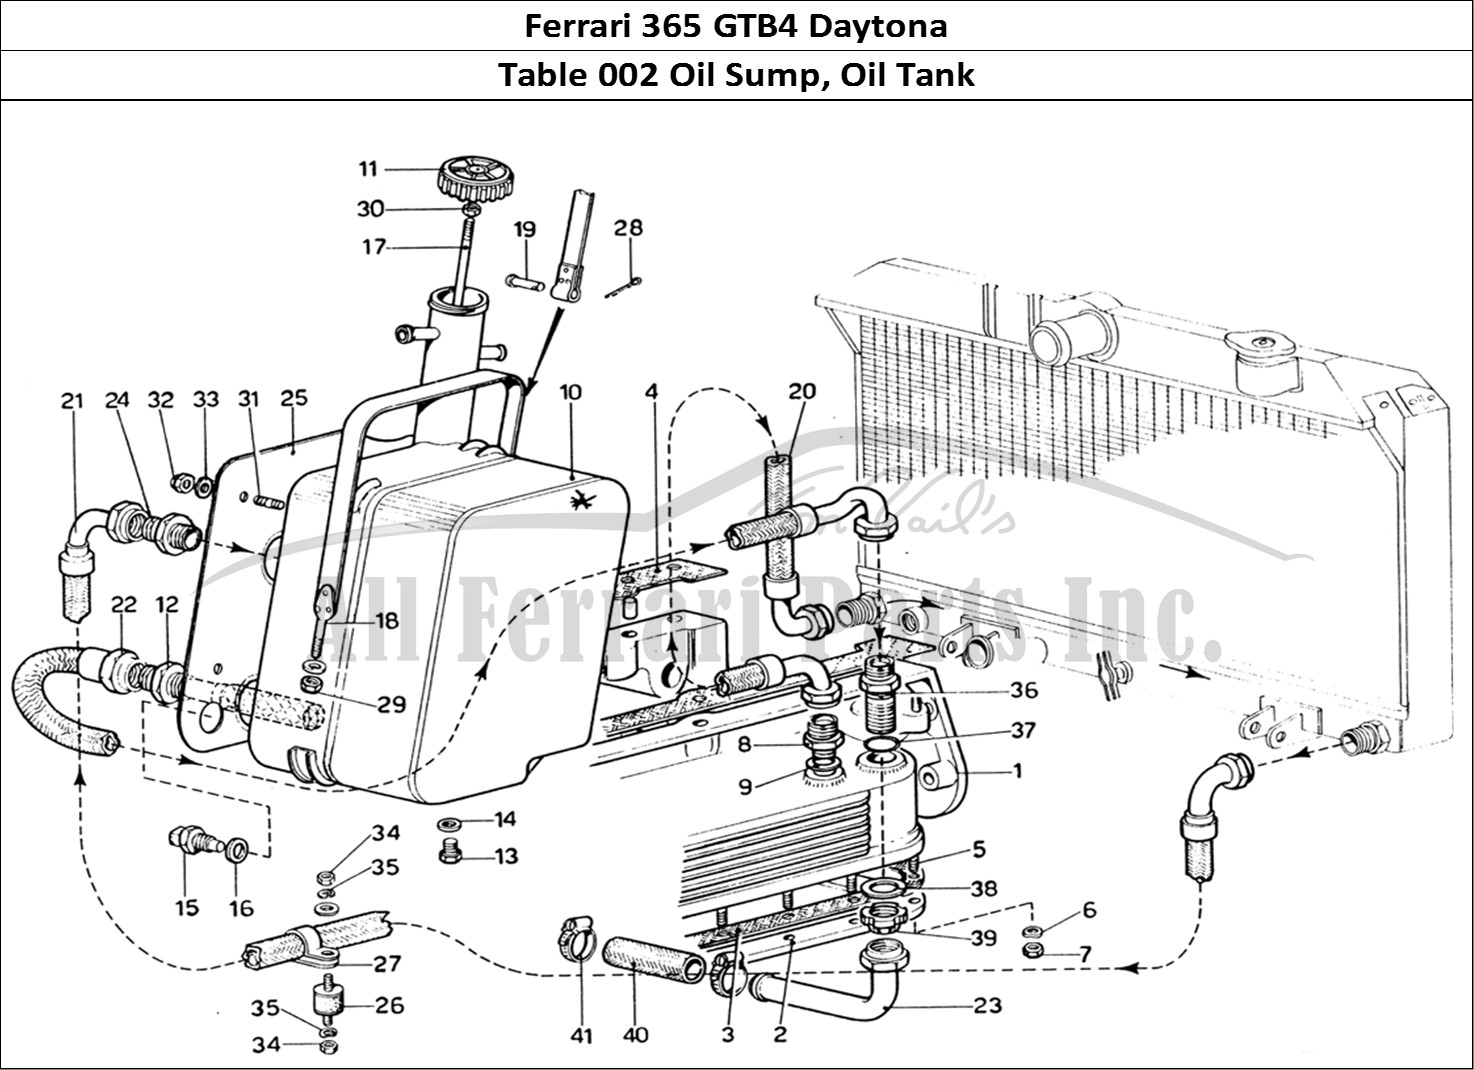 Ferrari Parts Ferrari 365 GTB4 Daytona (1969) Page 002 Oil Sump & Oil Tank